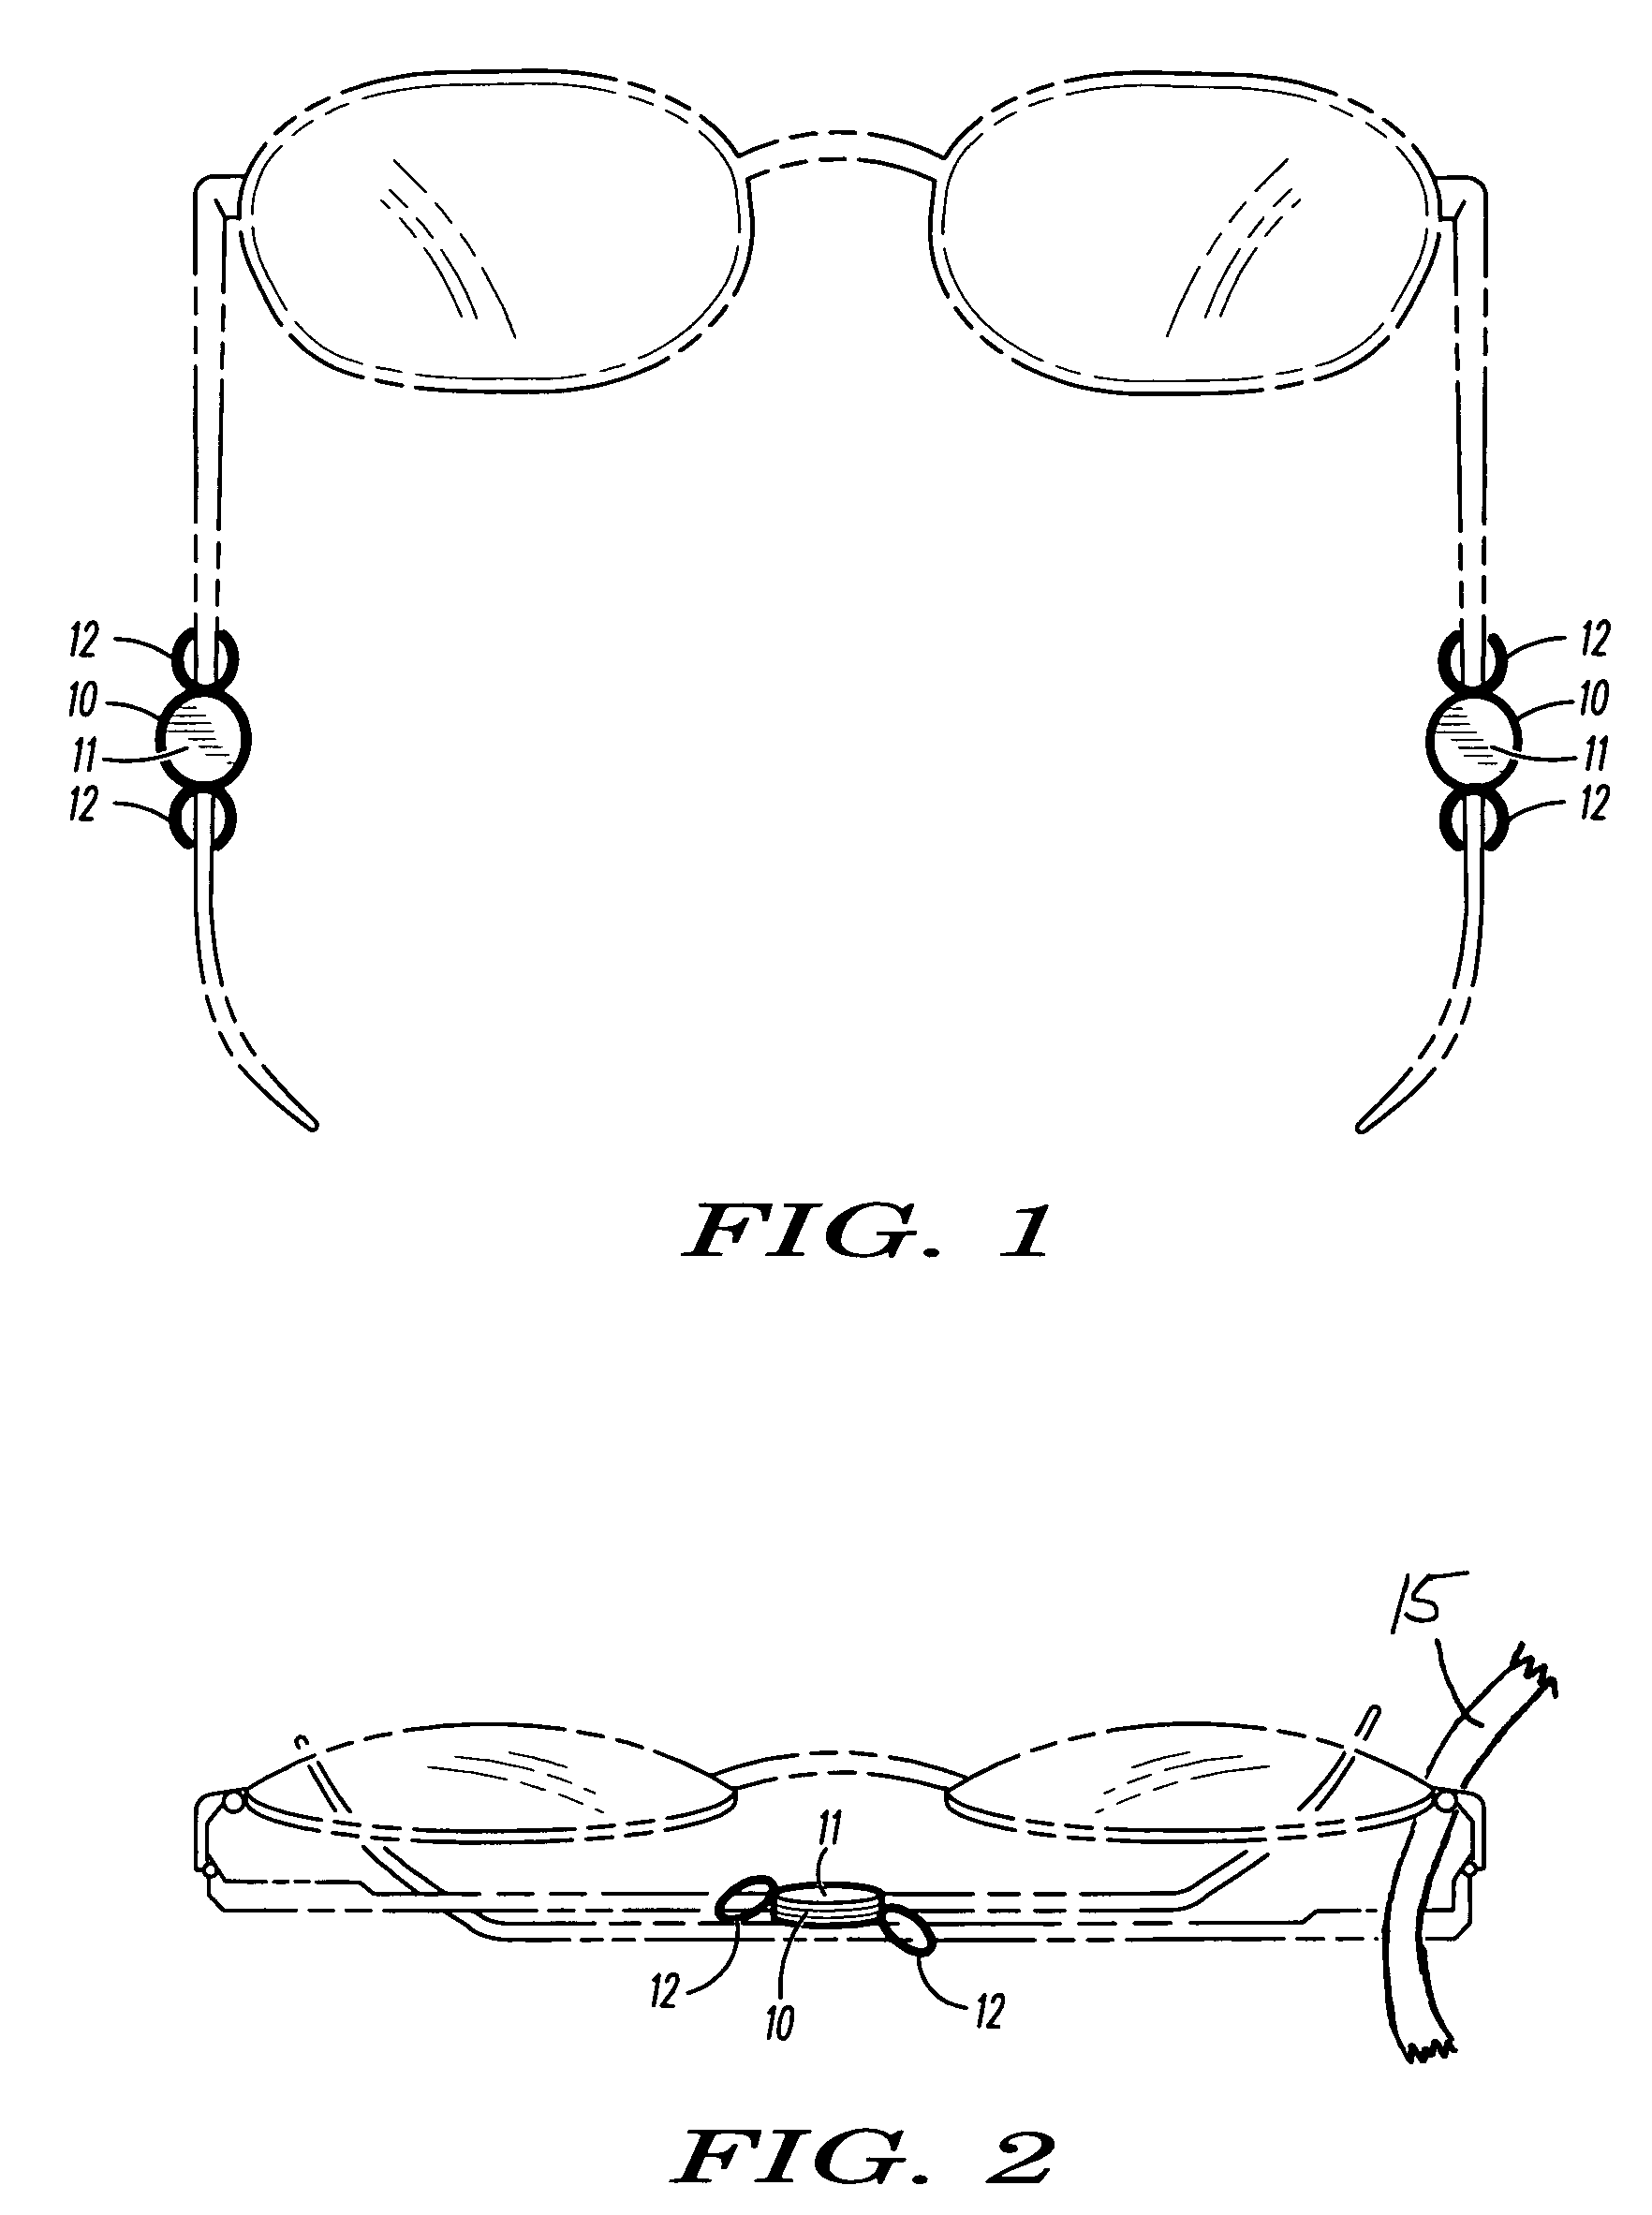 Magnetic eyeglass device